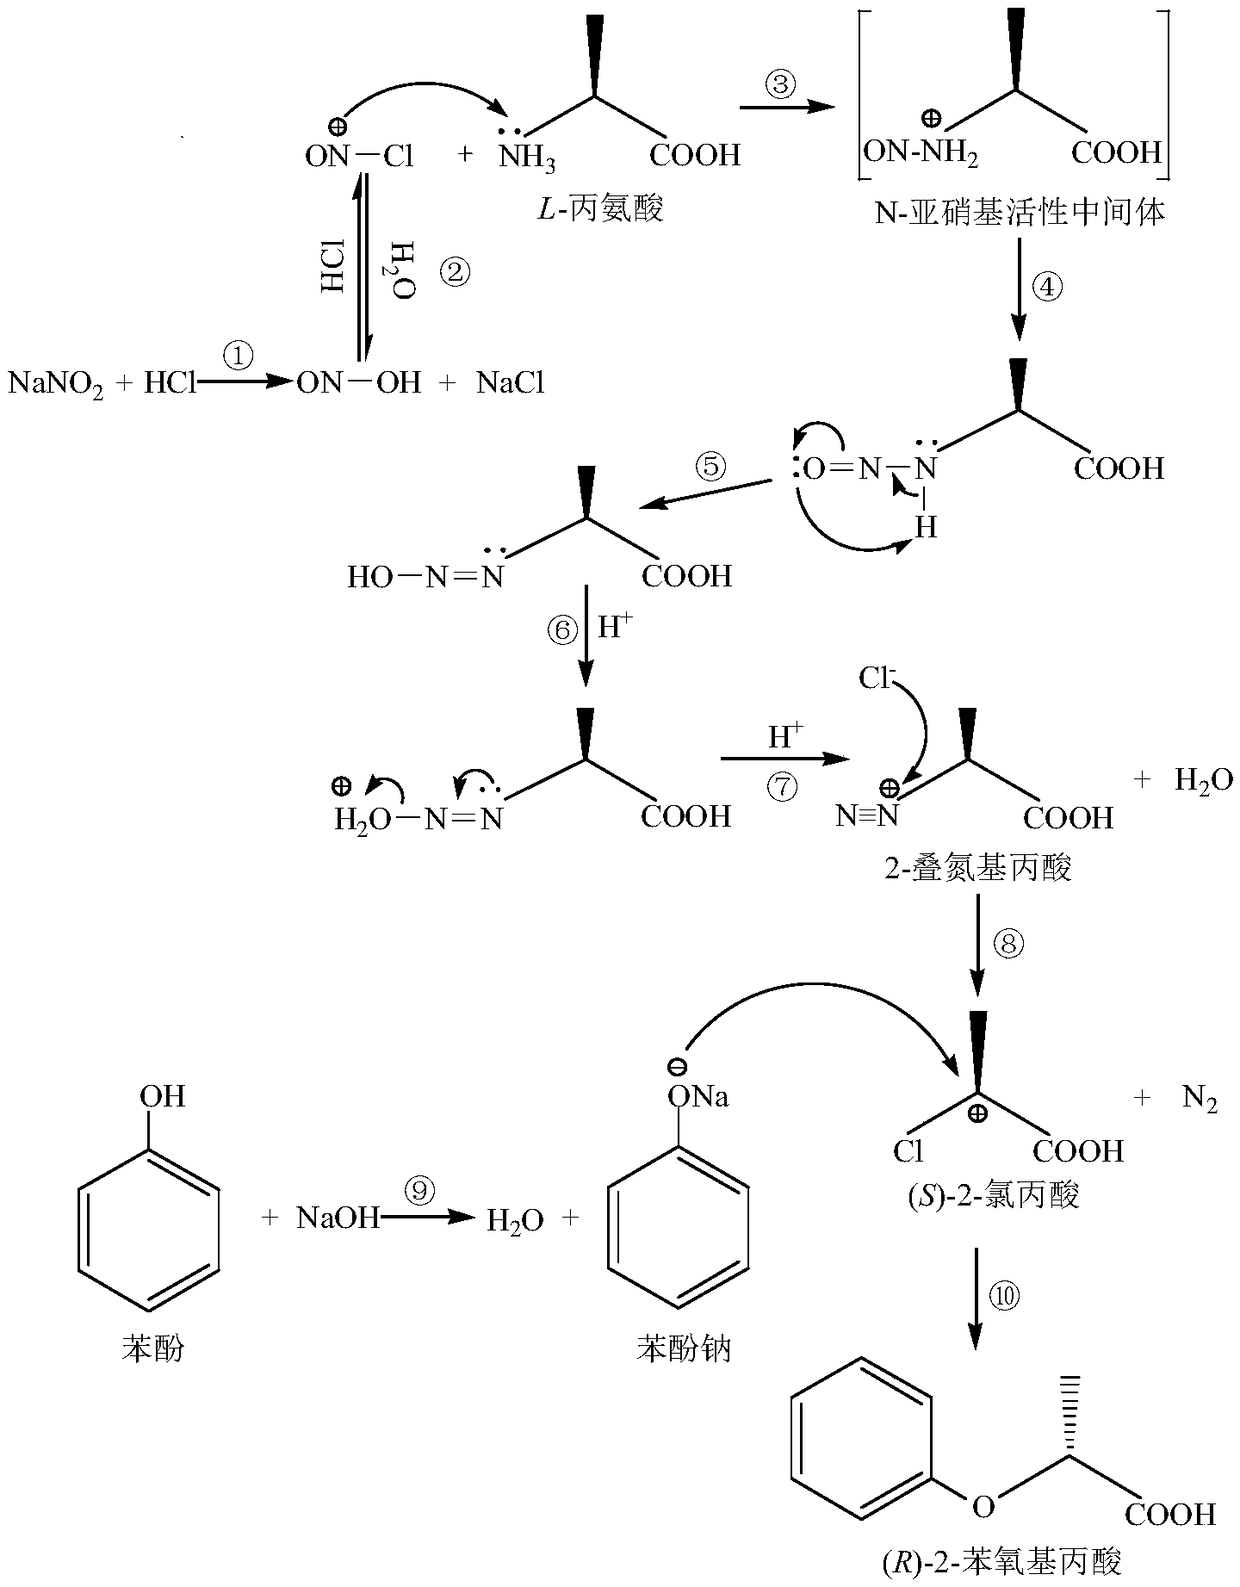 Chemical synthesis method of (R)-2-phenoxypropionic acid